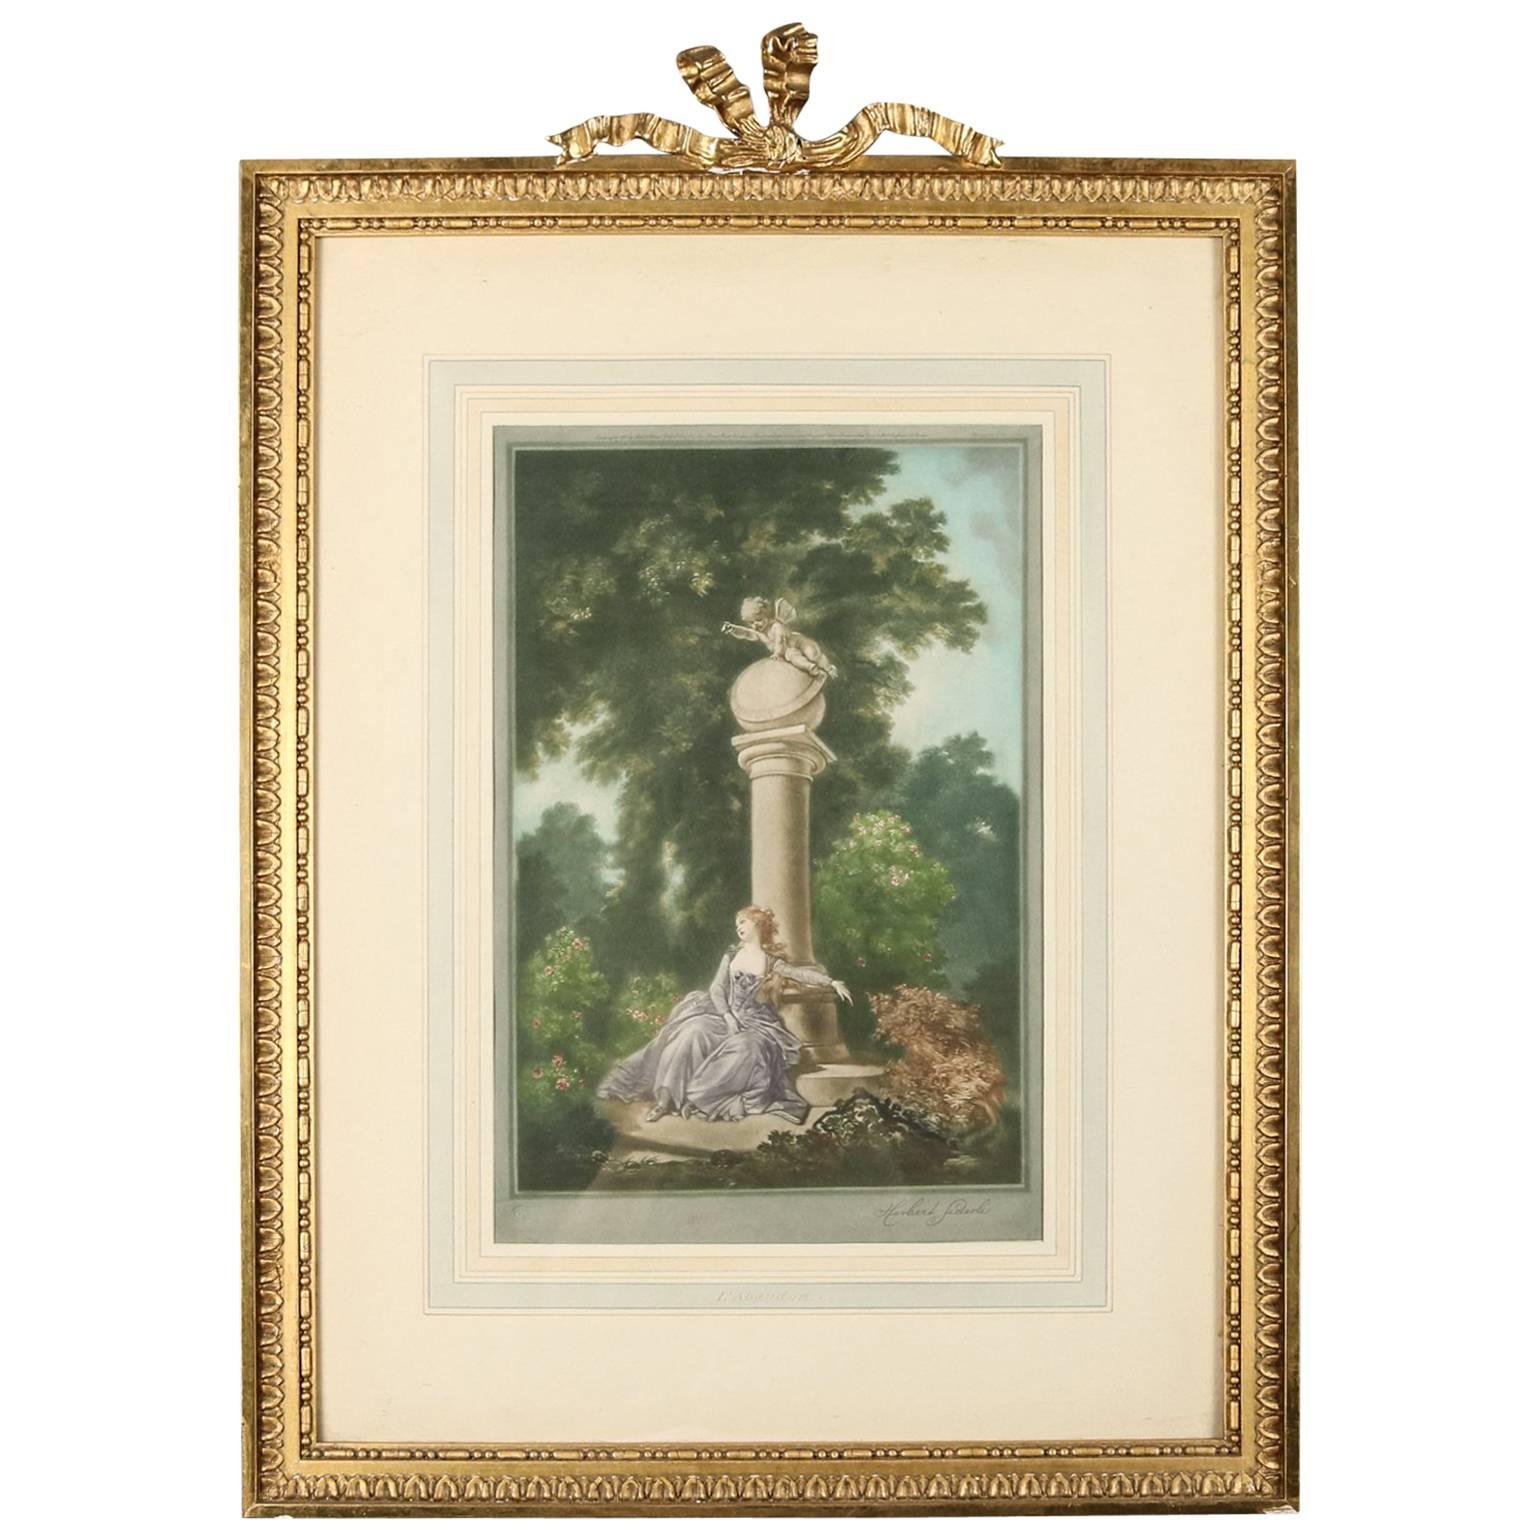 Antique English Print "L'Abandon" by Herbert Sedcole in Gilt Frame, 19th Century